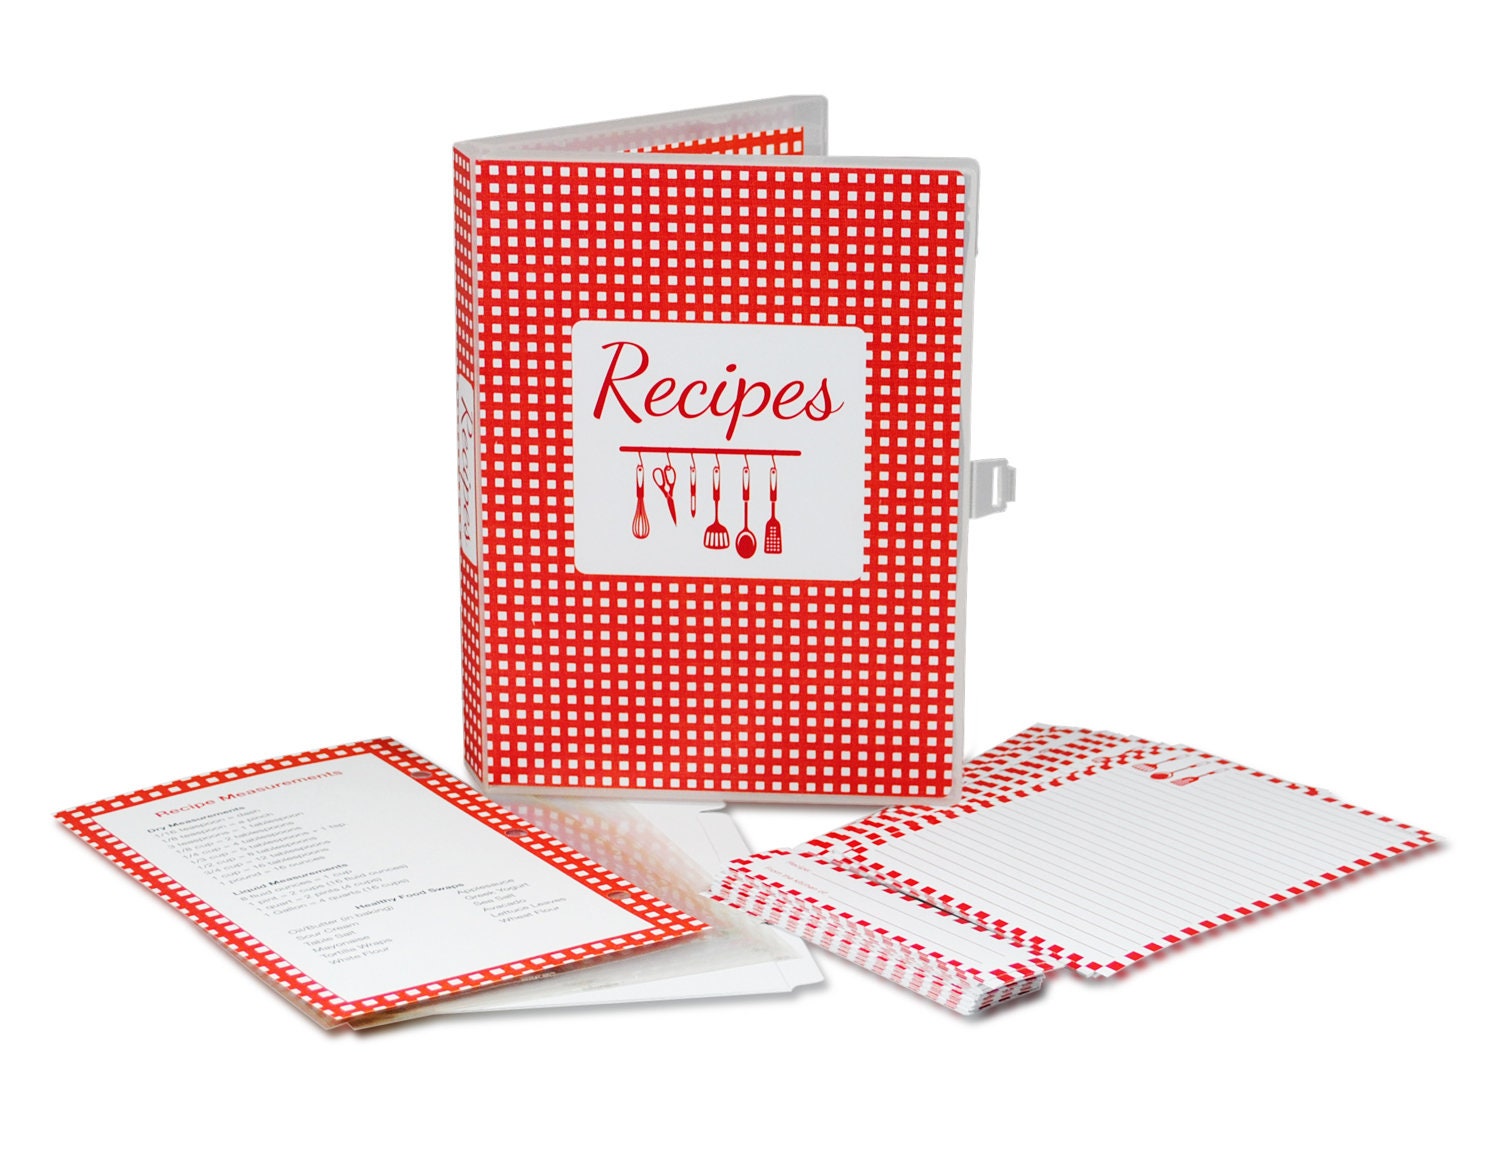 COFICE Recipe Book To Write In Your Own Recipes, 8.5x9.5 Recipe Ring B